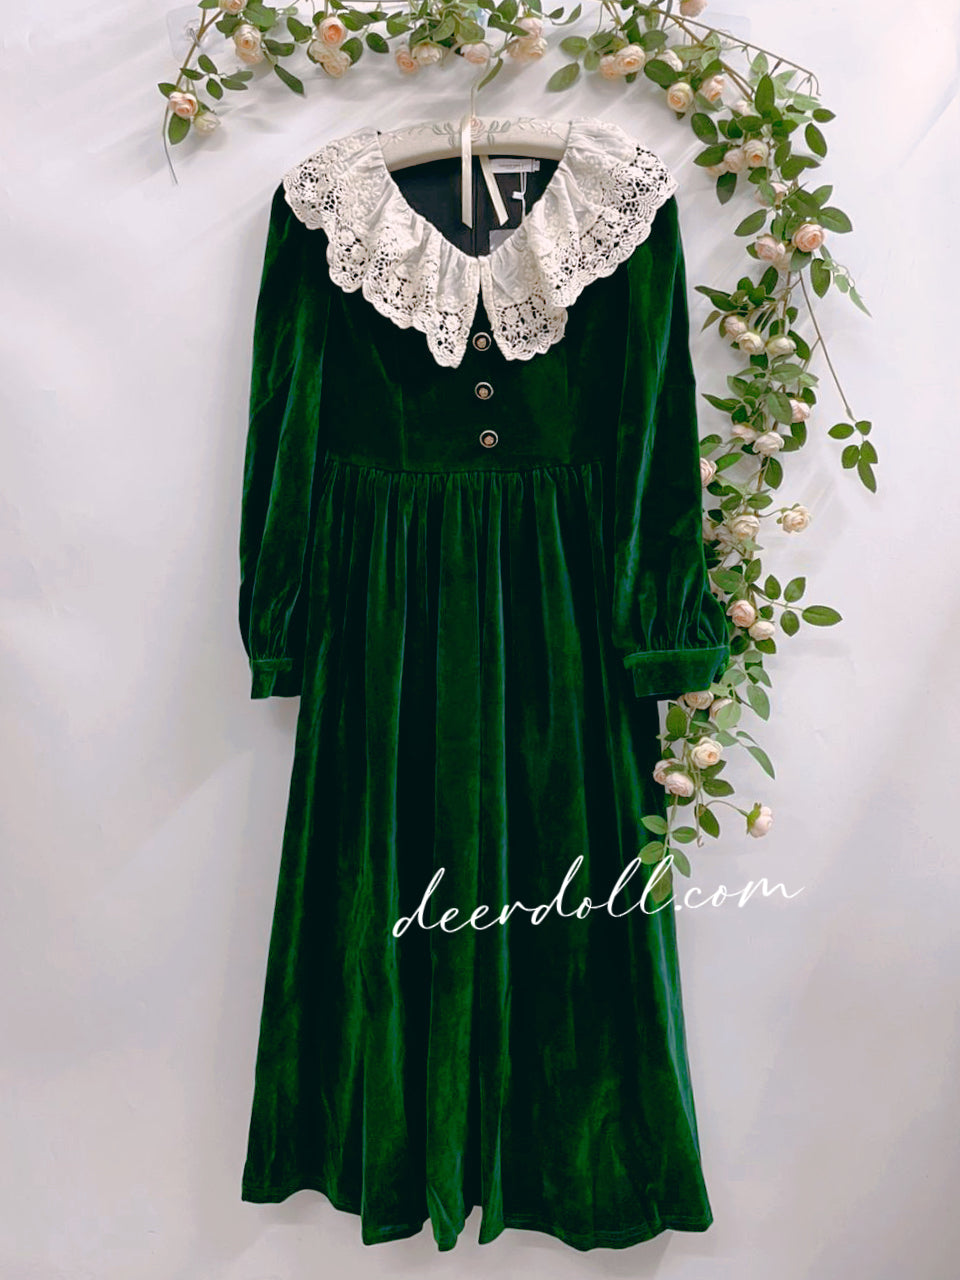 Treasures of Old Towns Vintage Academia Velvet Dress